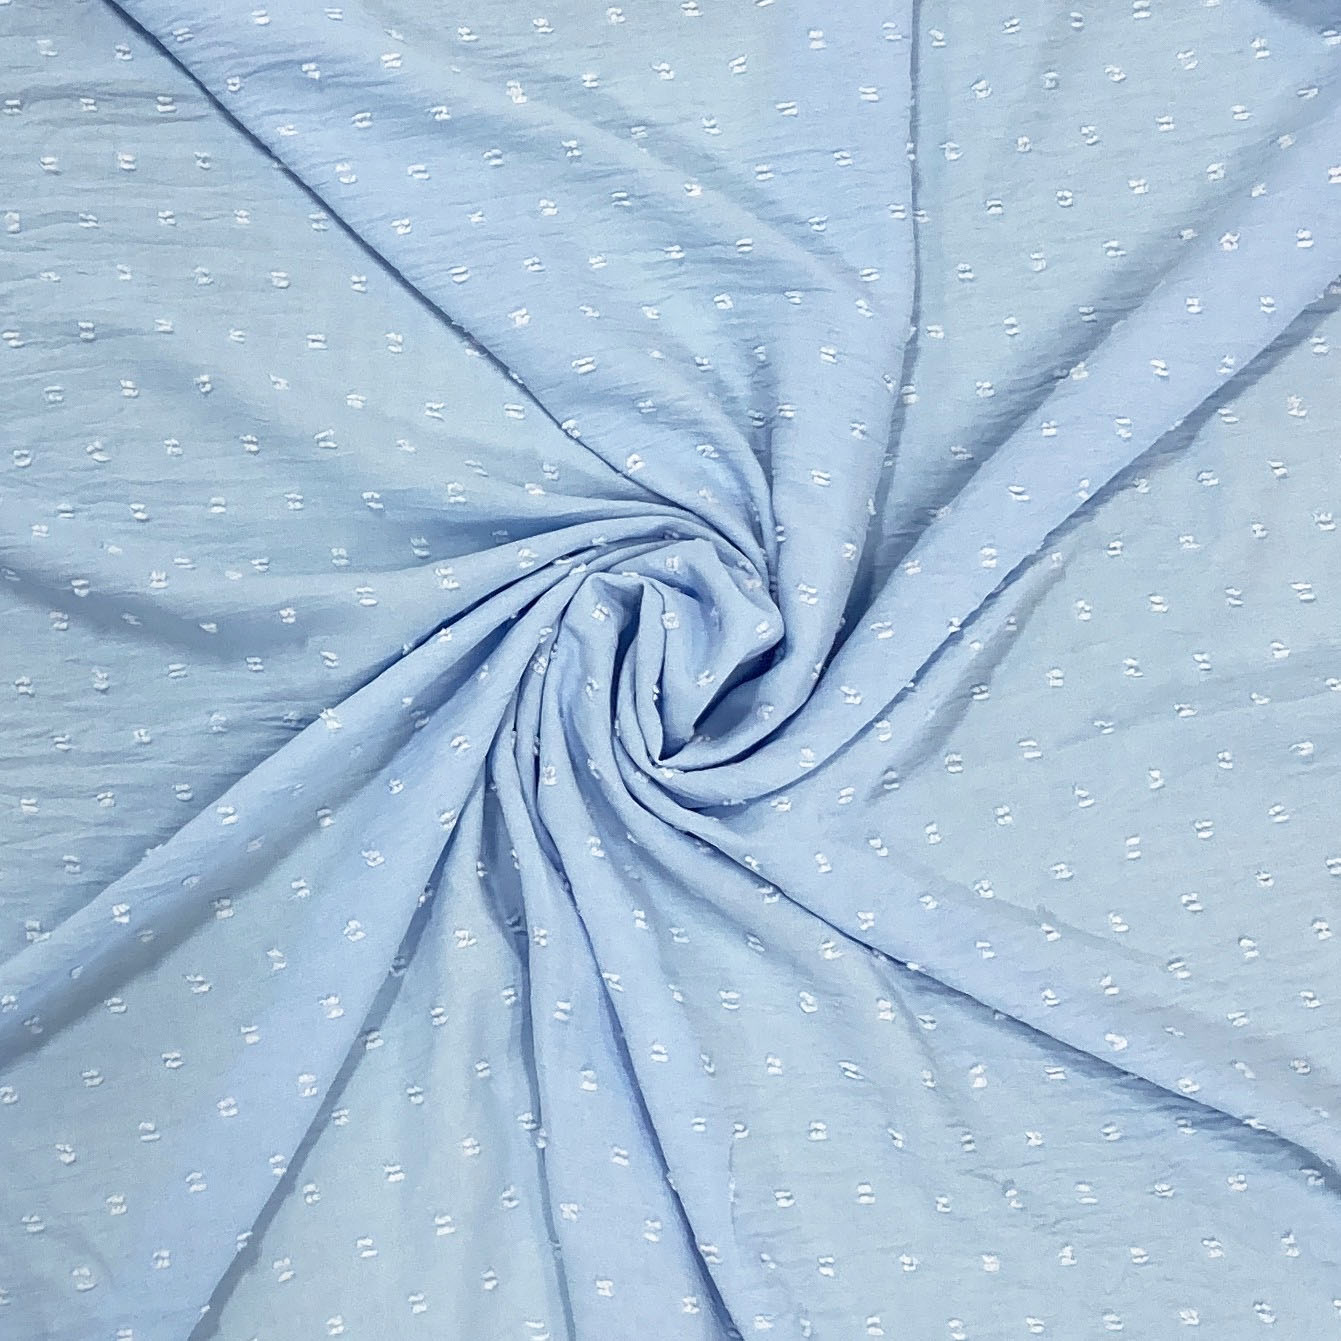 Sky Blue Swiss Dot Fabric Fabric, Raspberry Creek Fabrics